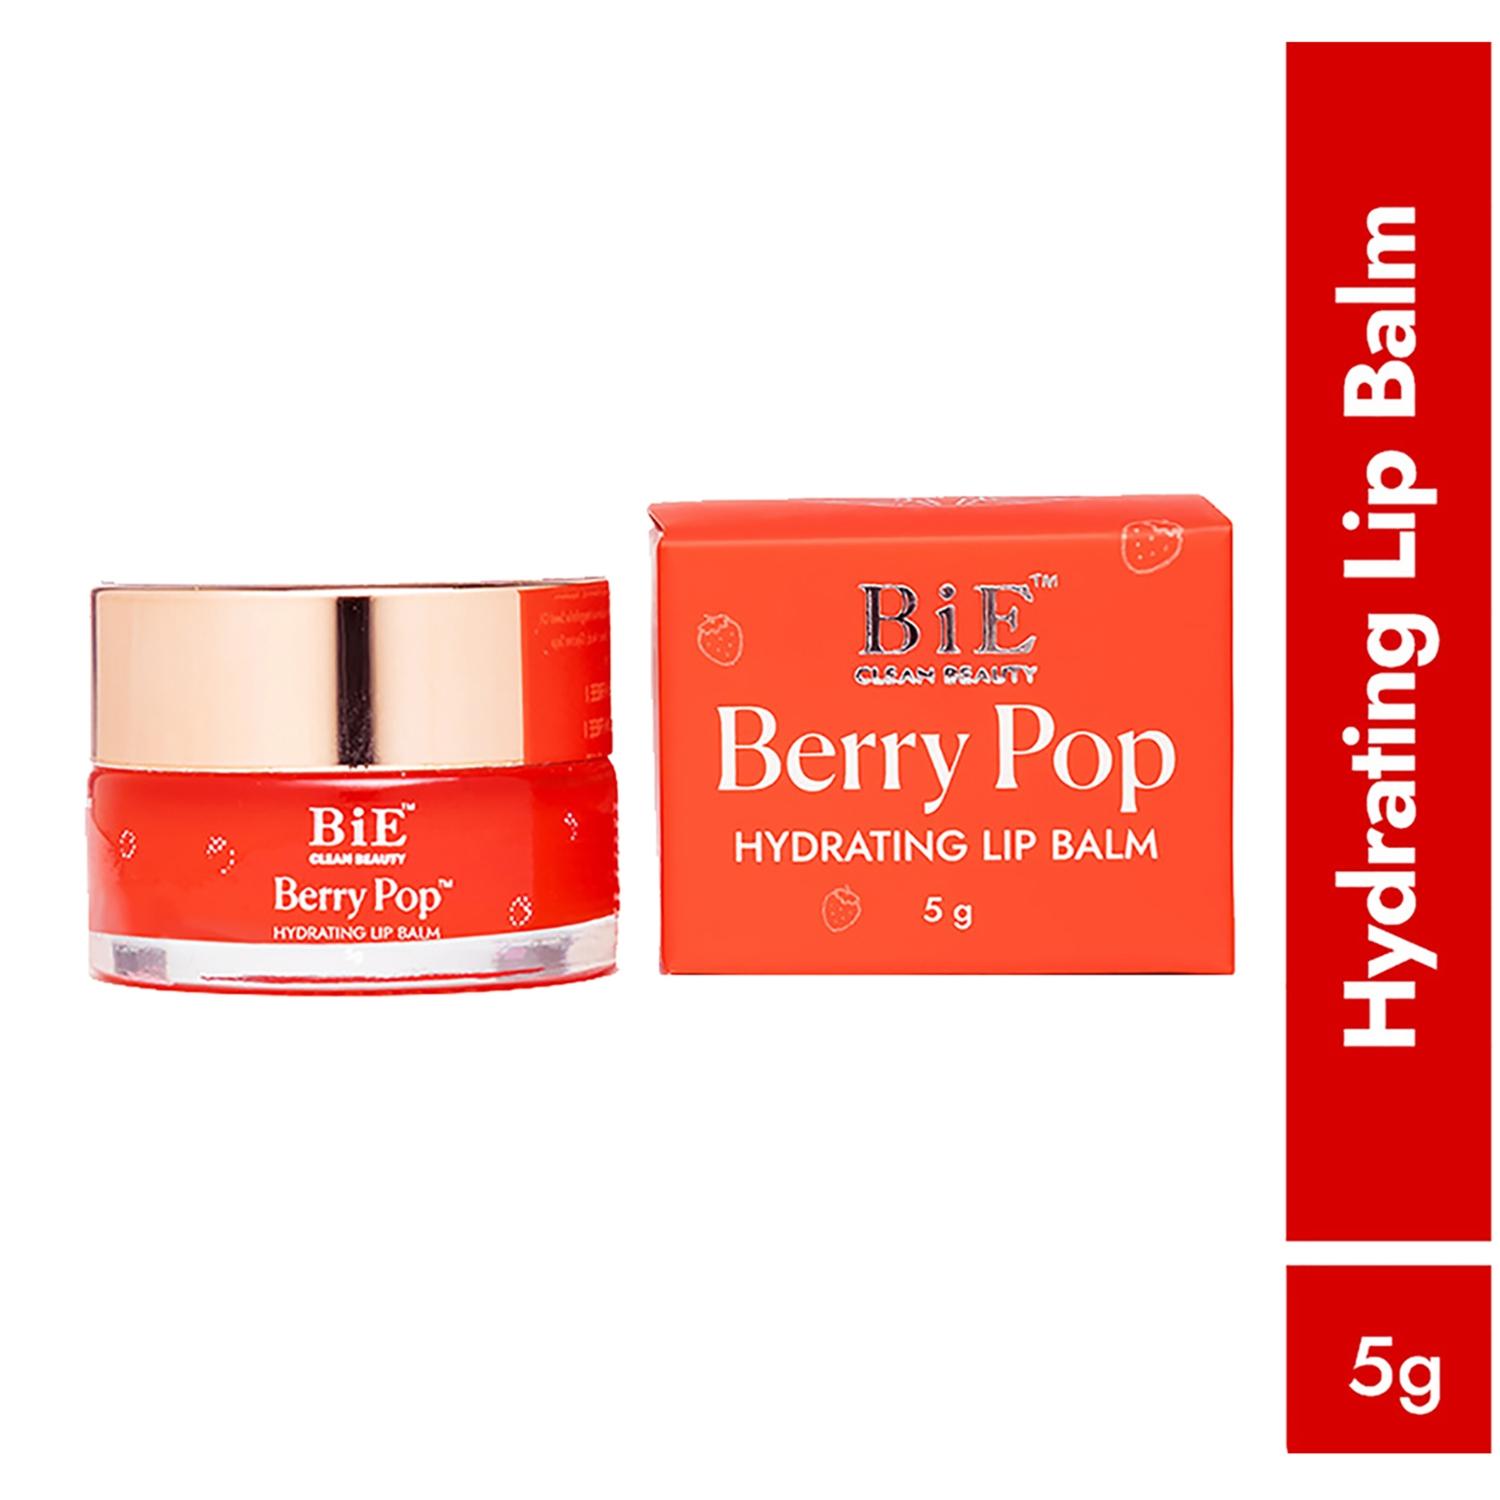 bie berry pop hydrating lip balm (5g)